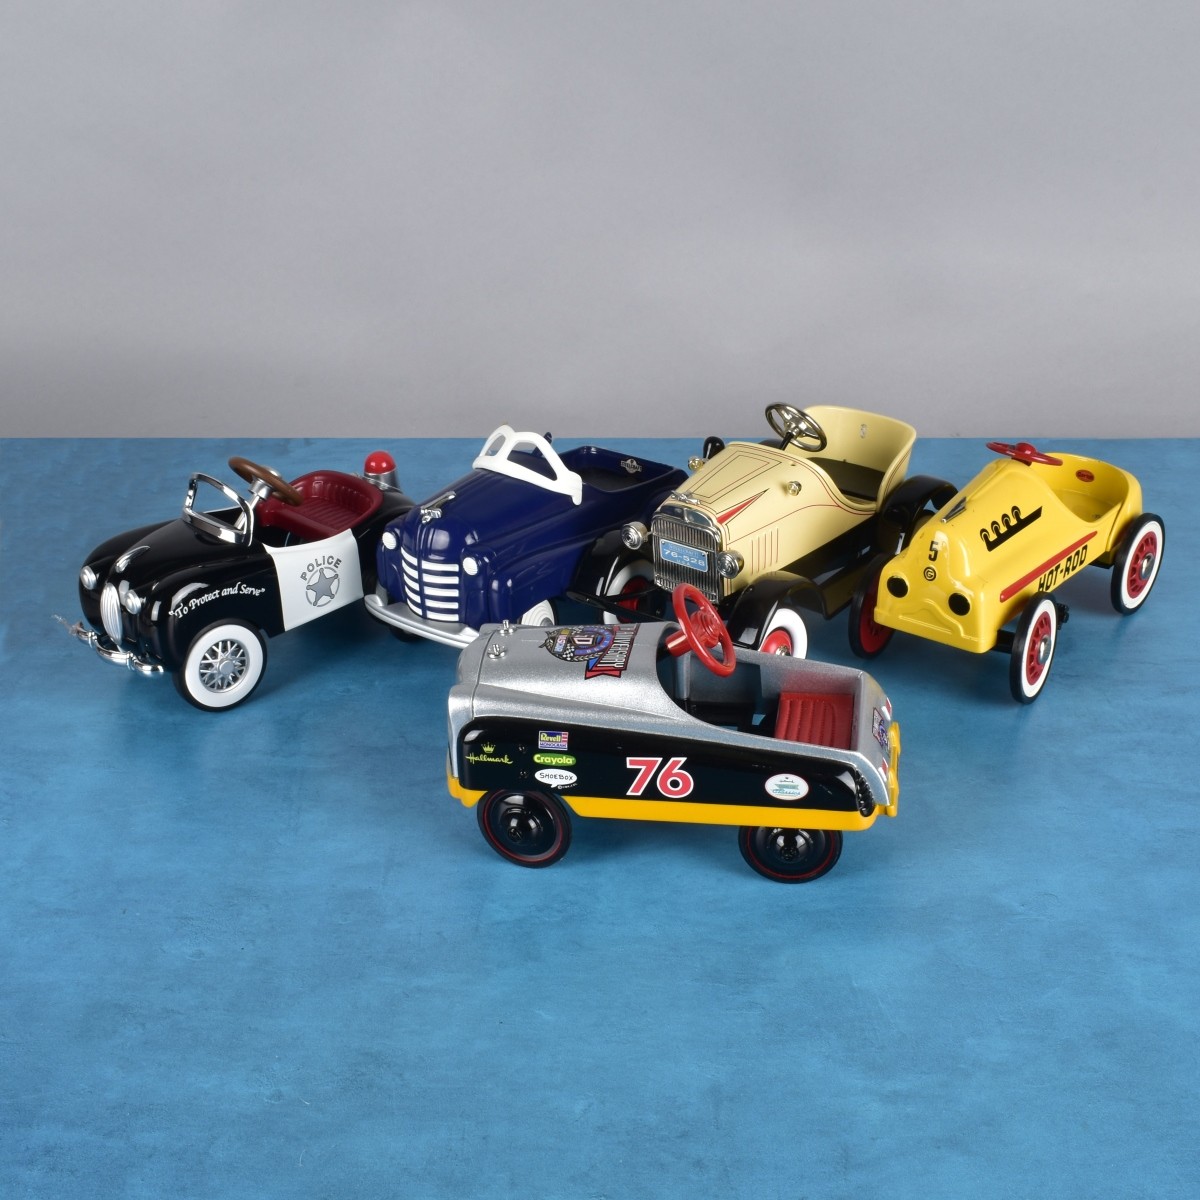 Grouping Hallmark "Kiddie Car" Classic Cars